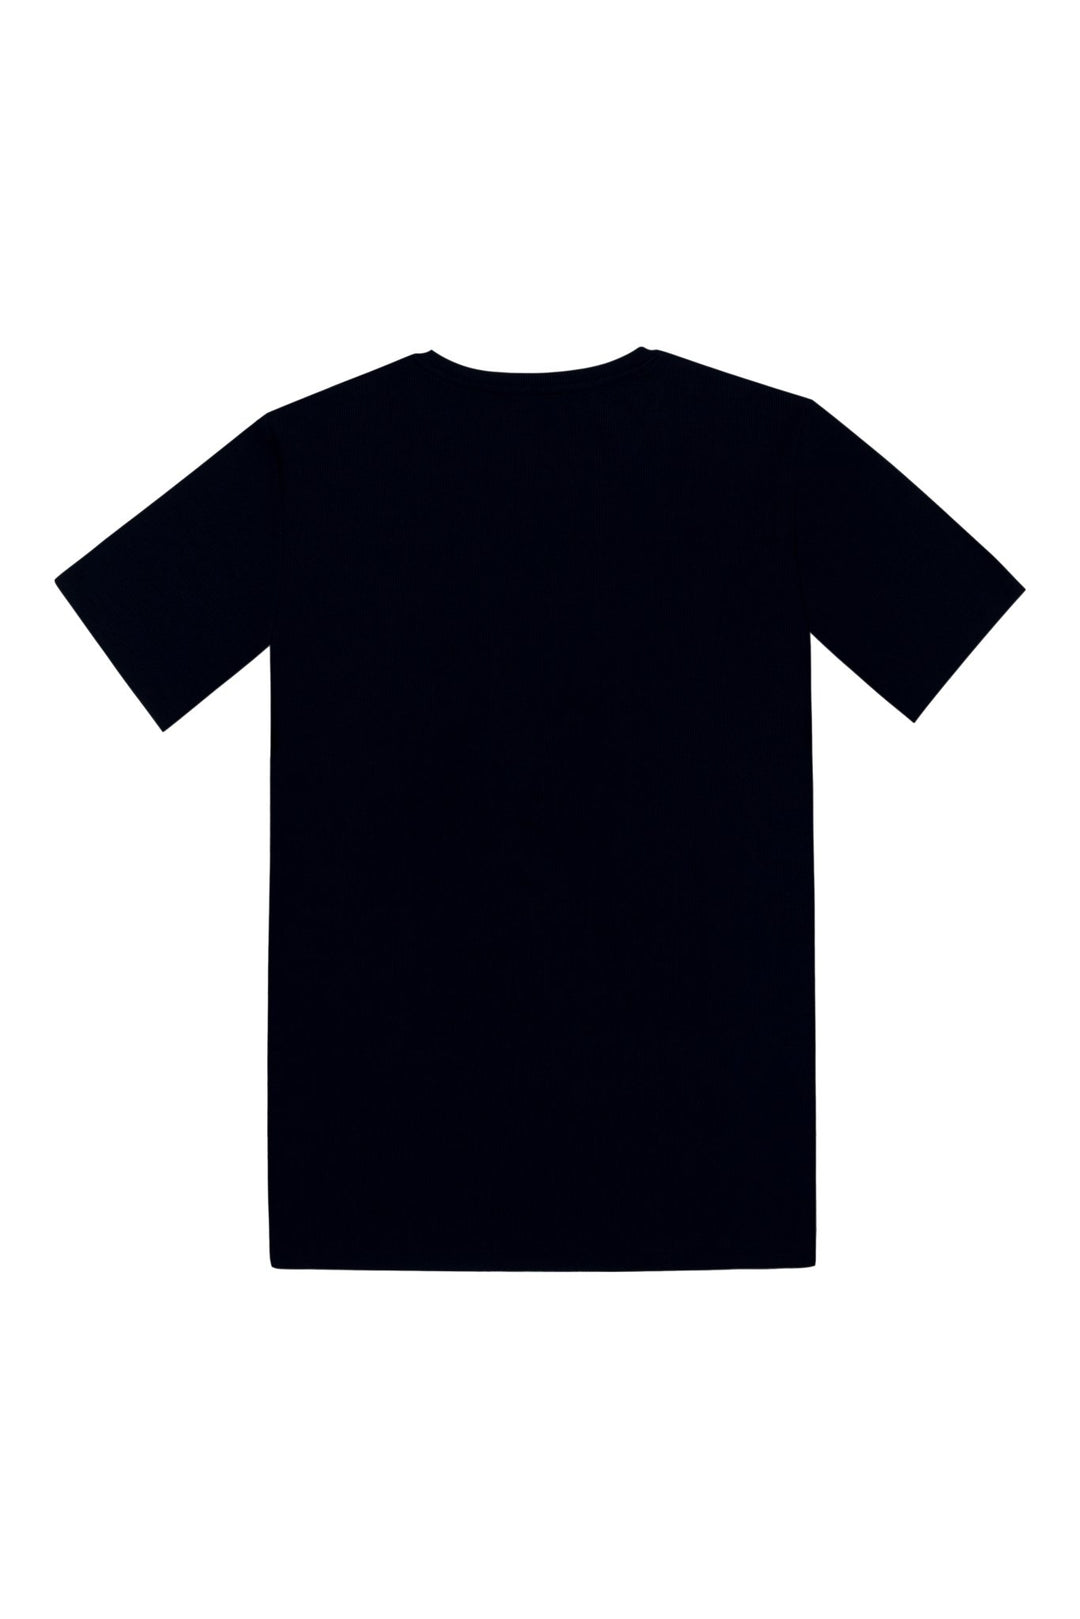 Women's Personalised Jersey Bamboo Lounge T-Shirt - Black